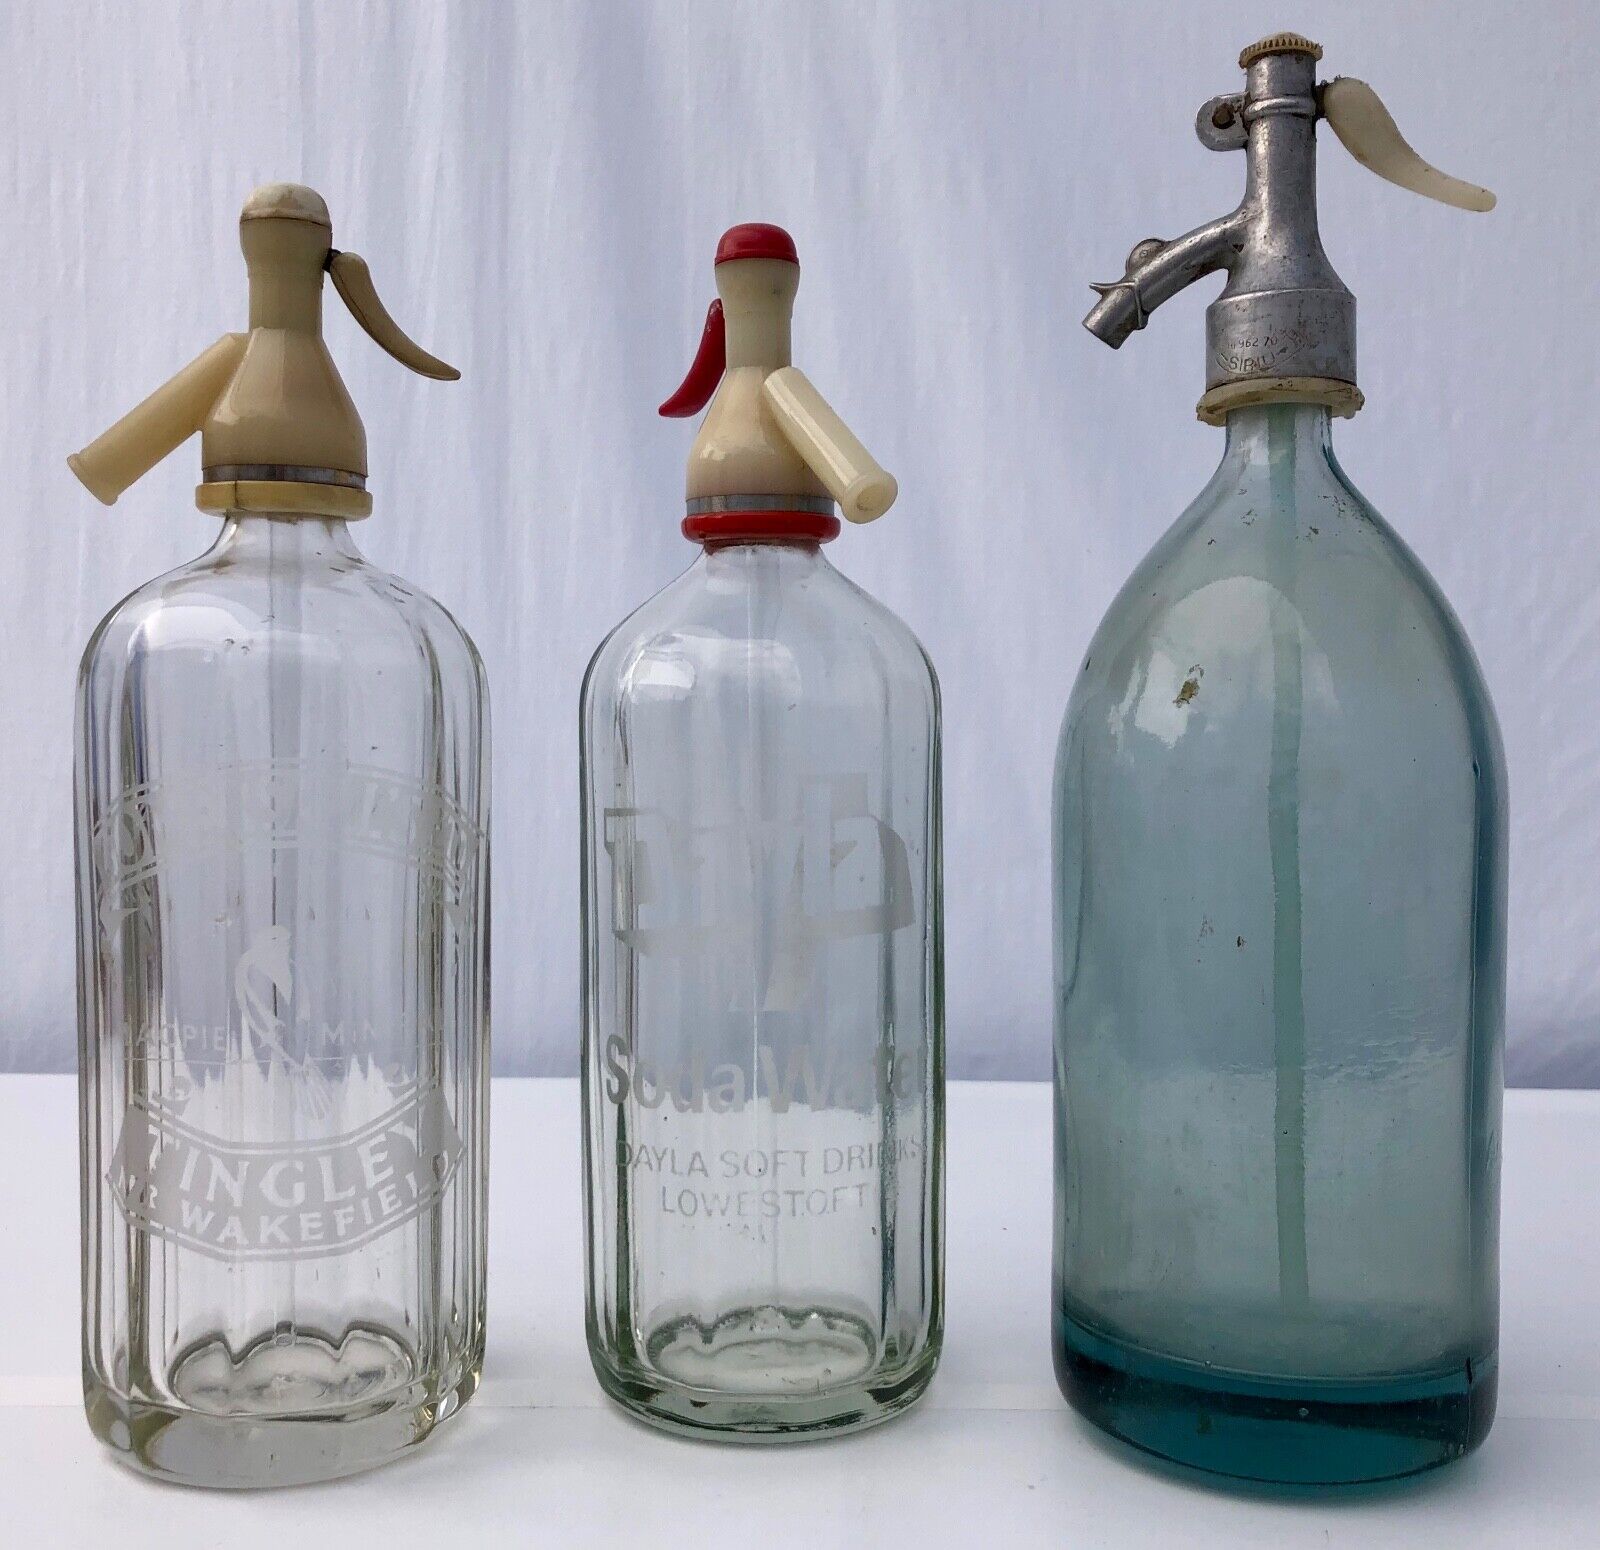 Set Of 3 Vintage Seltzer Bottles Tingley Wakefield, Dayla Softdrinks, 1 Blue